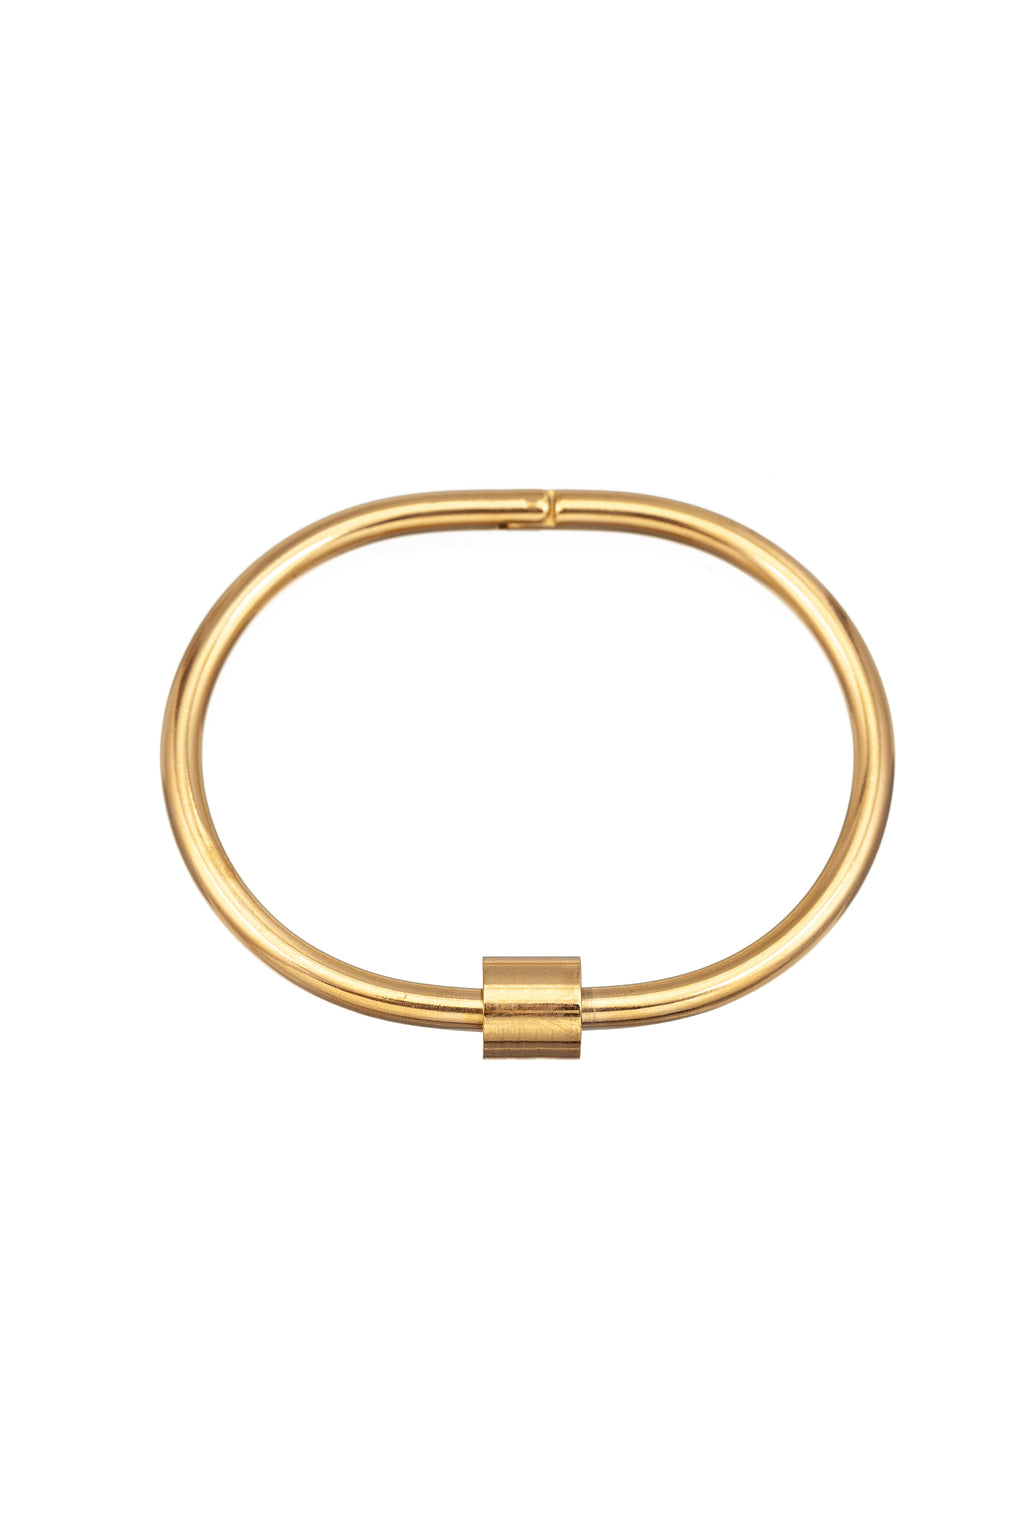 Gold tone titanium screw cuff bracelet.